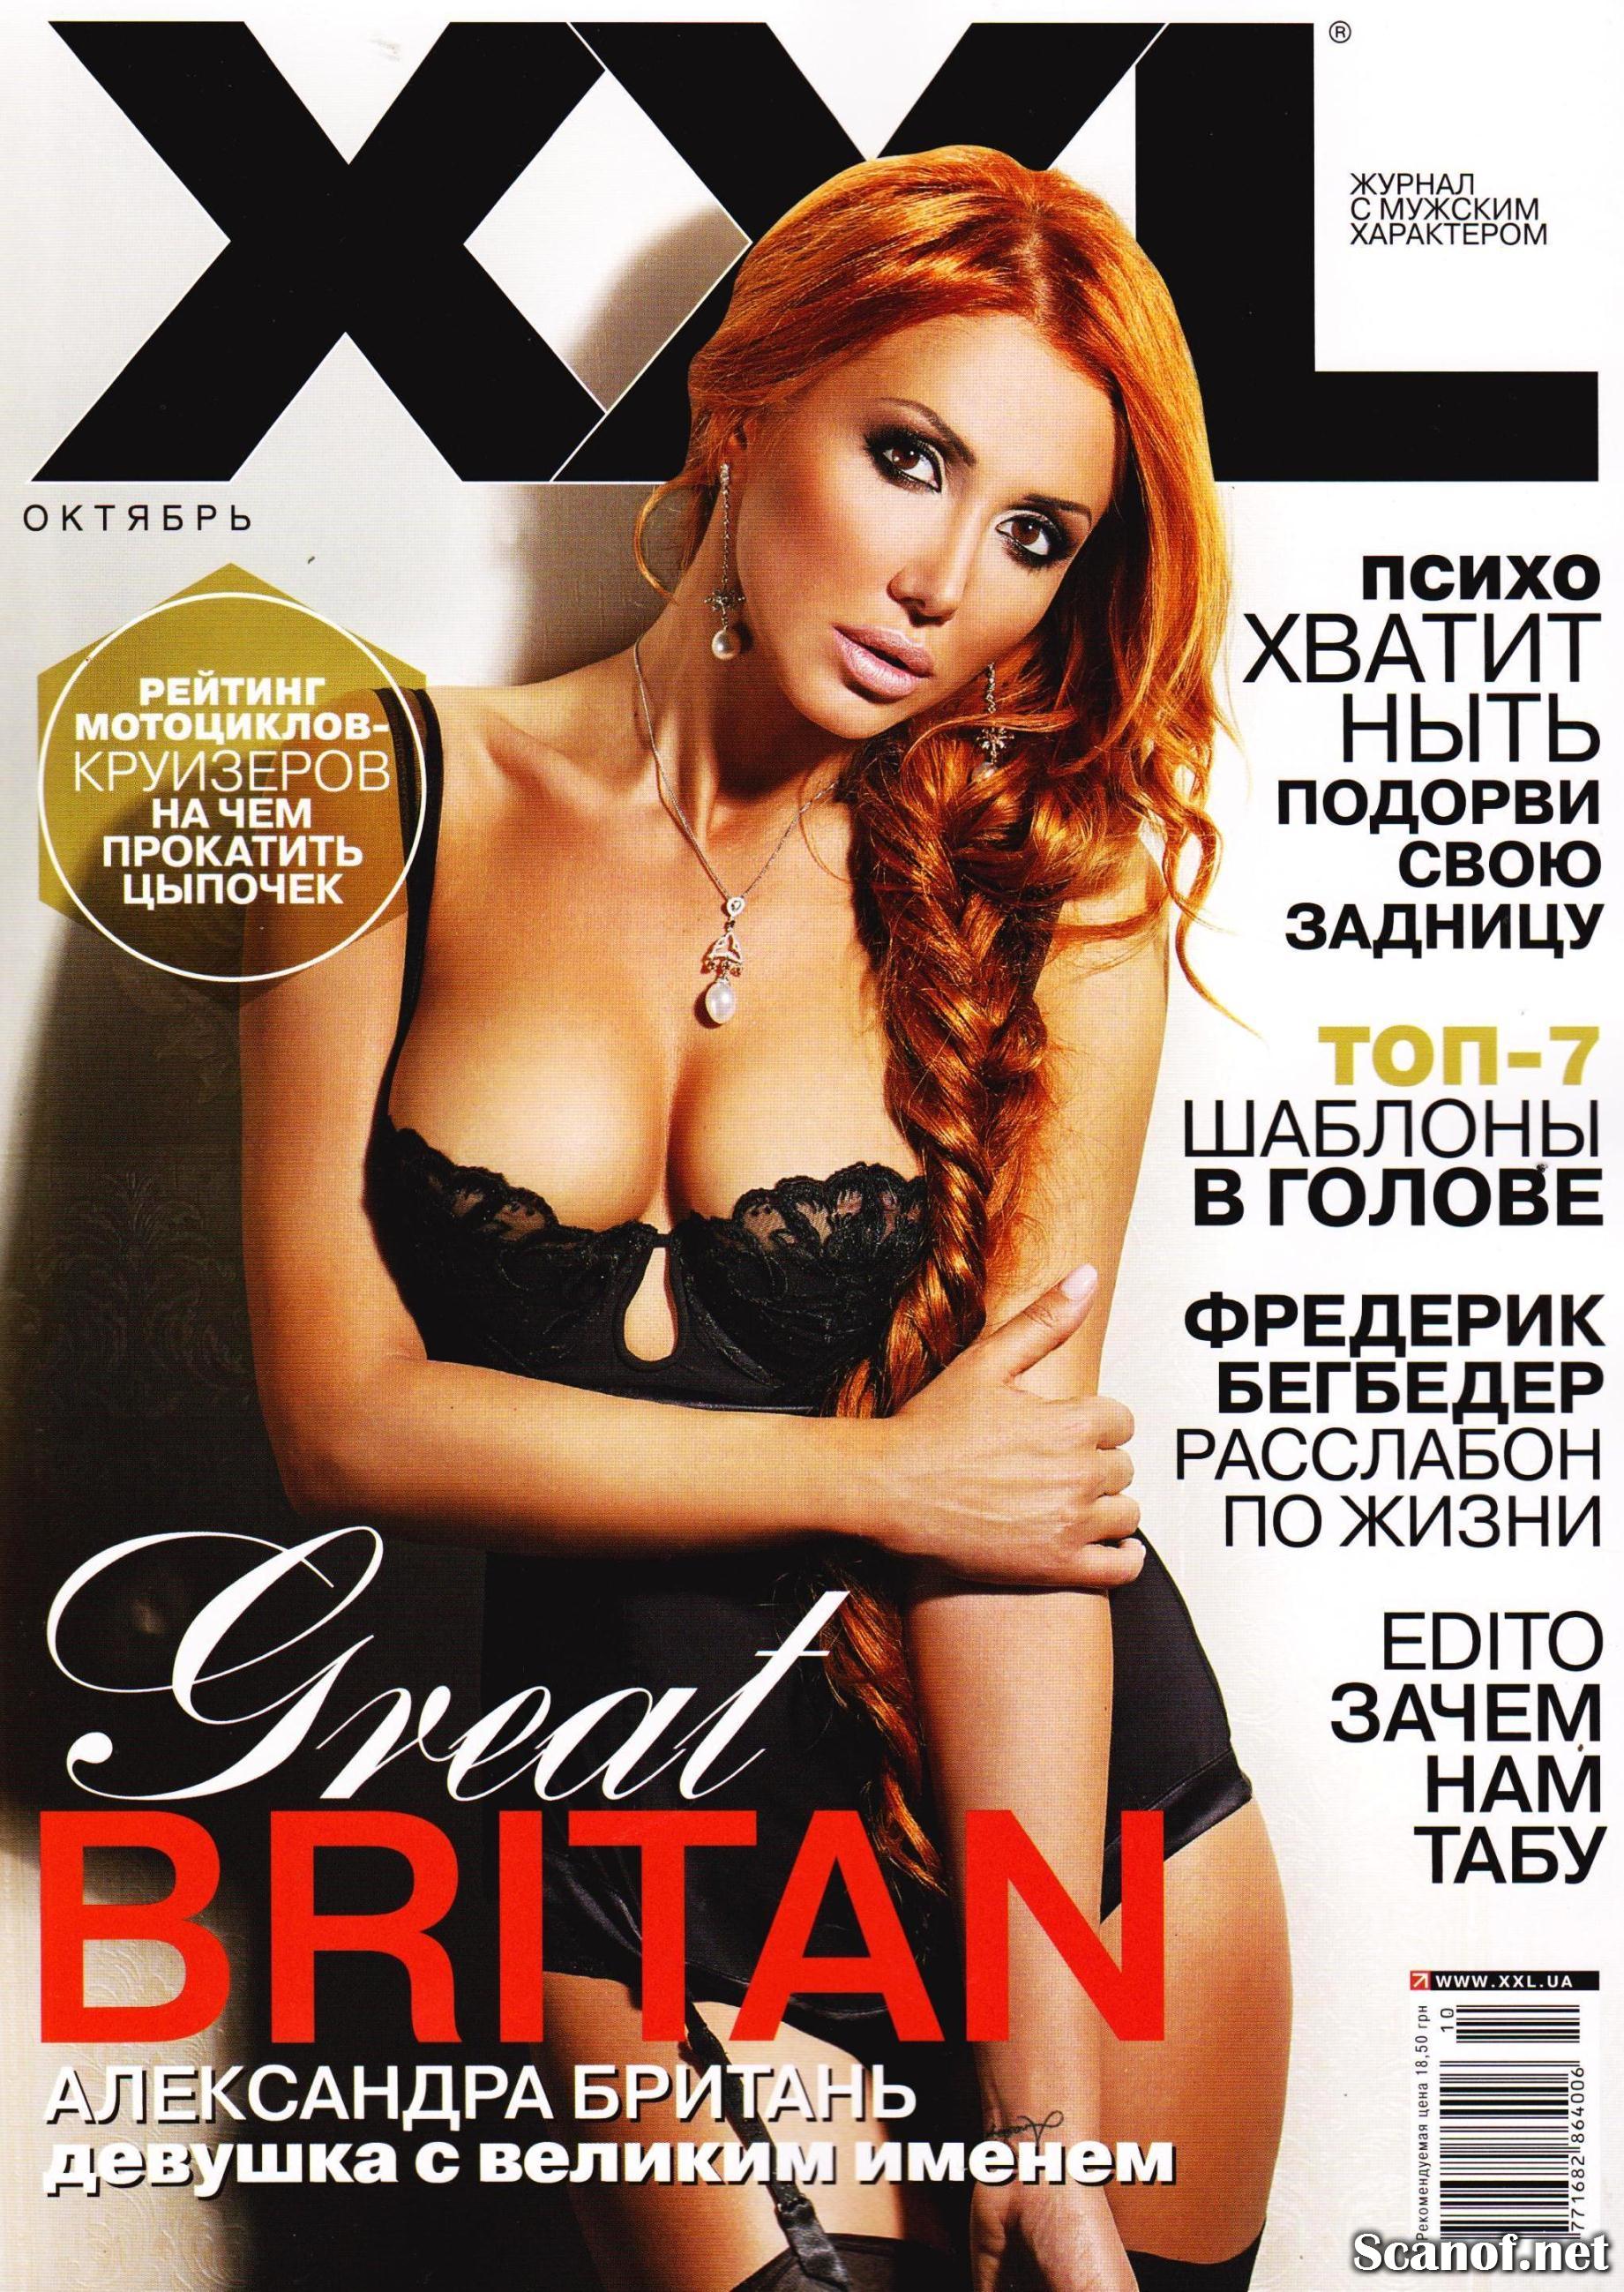 Aleksandra Britan for XXL Magazine Ukraine